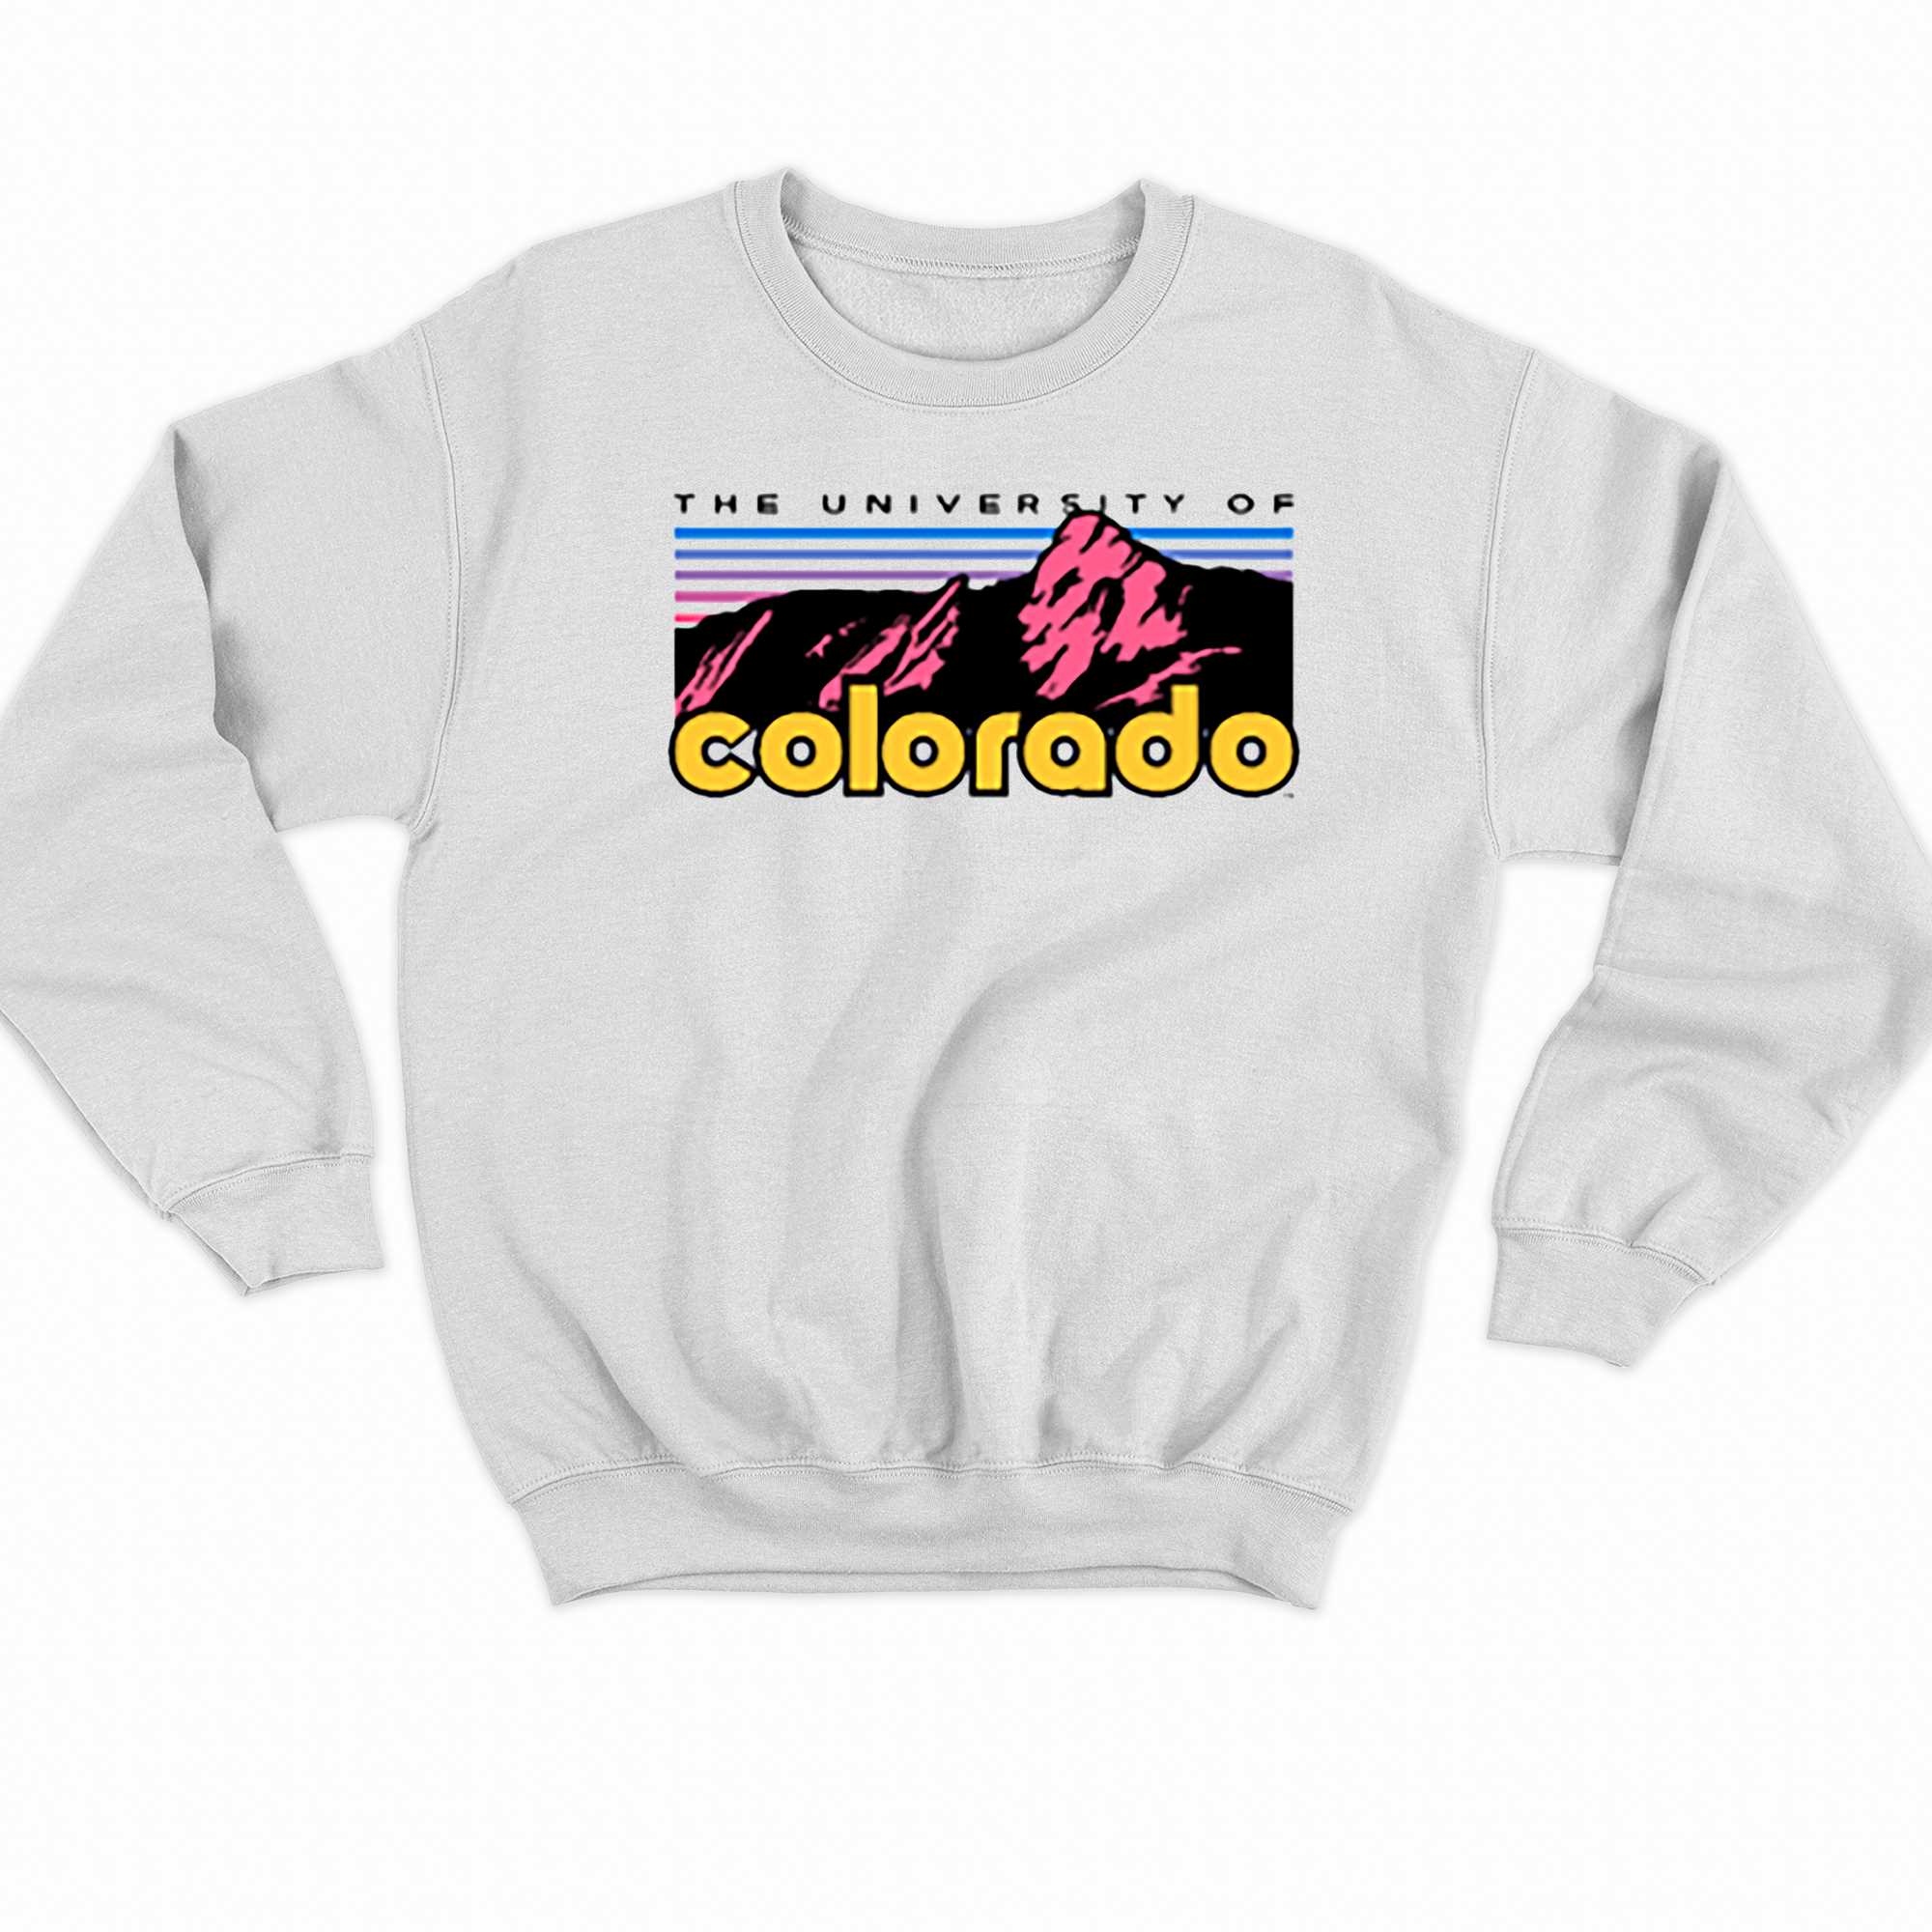 The University Of Colorado T-shirt 